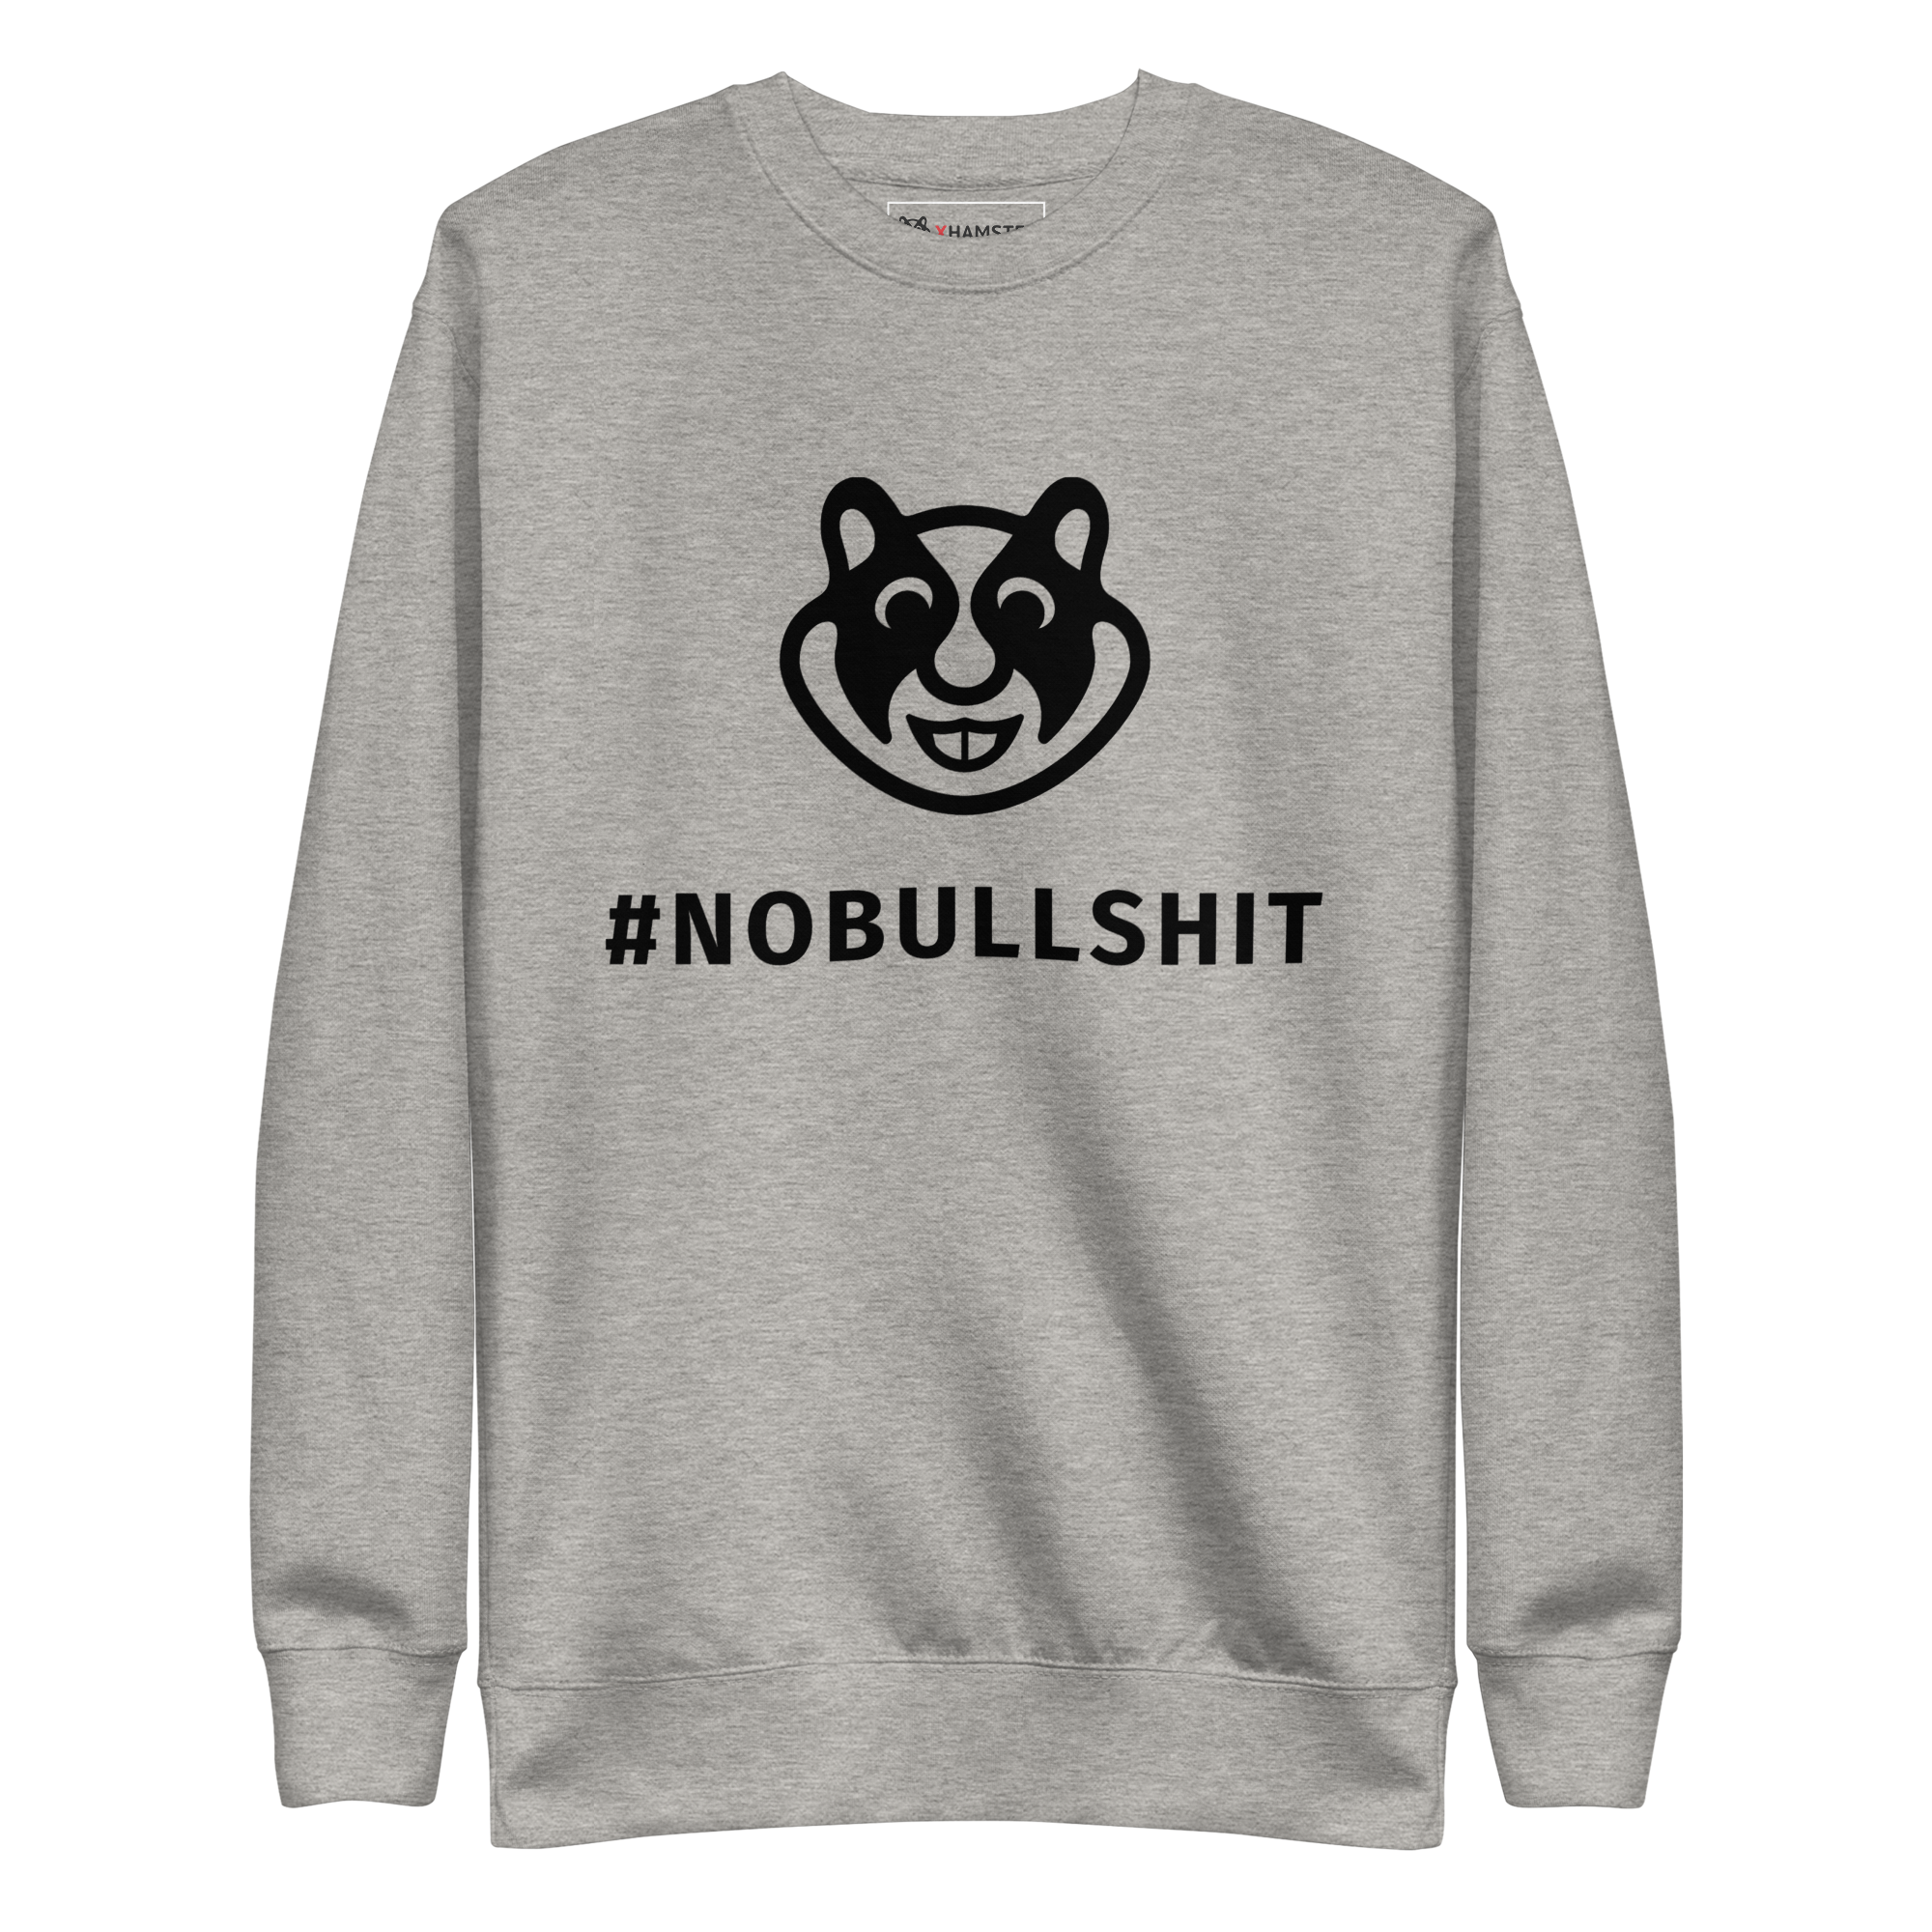 xHamster Unisex Sweatshirt #nobullshit White/Carbon Grey